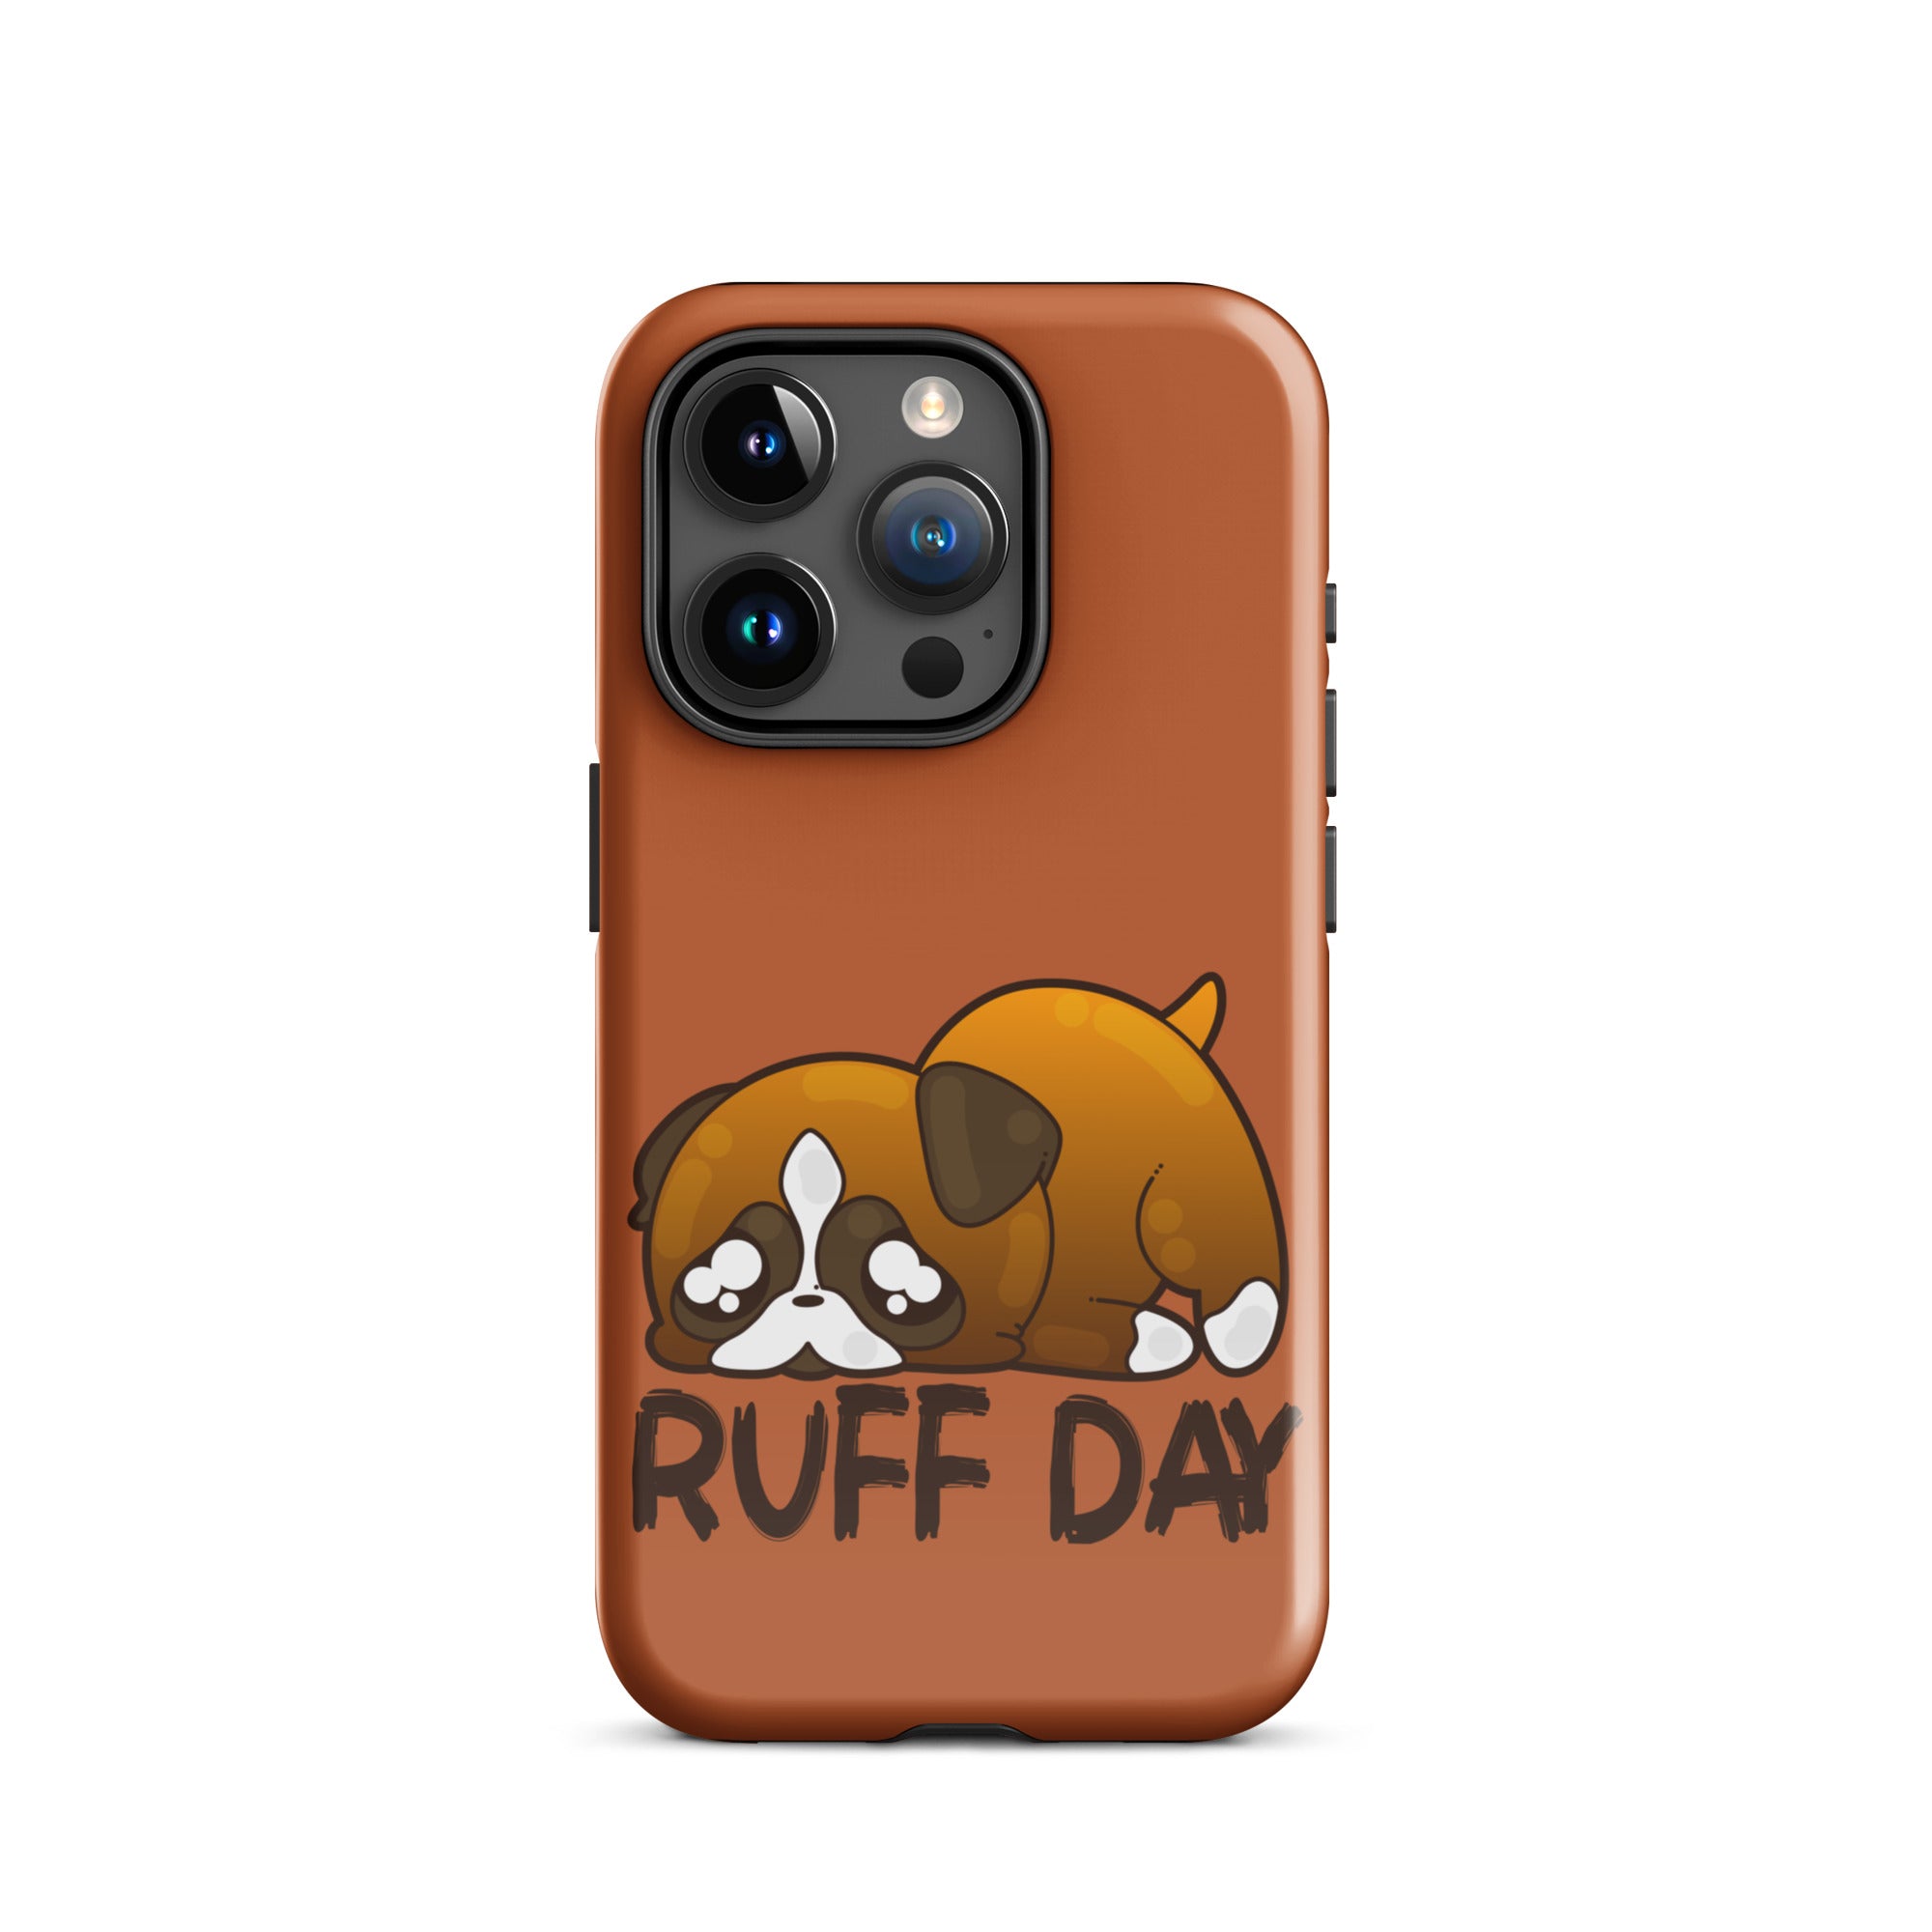 RUFF DAY - Tough Case for iPhone® - ChubbleGumLLC